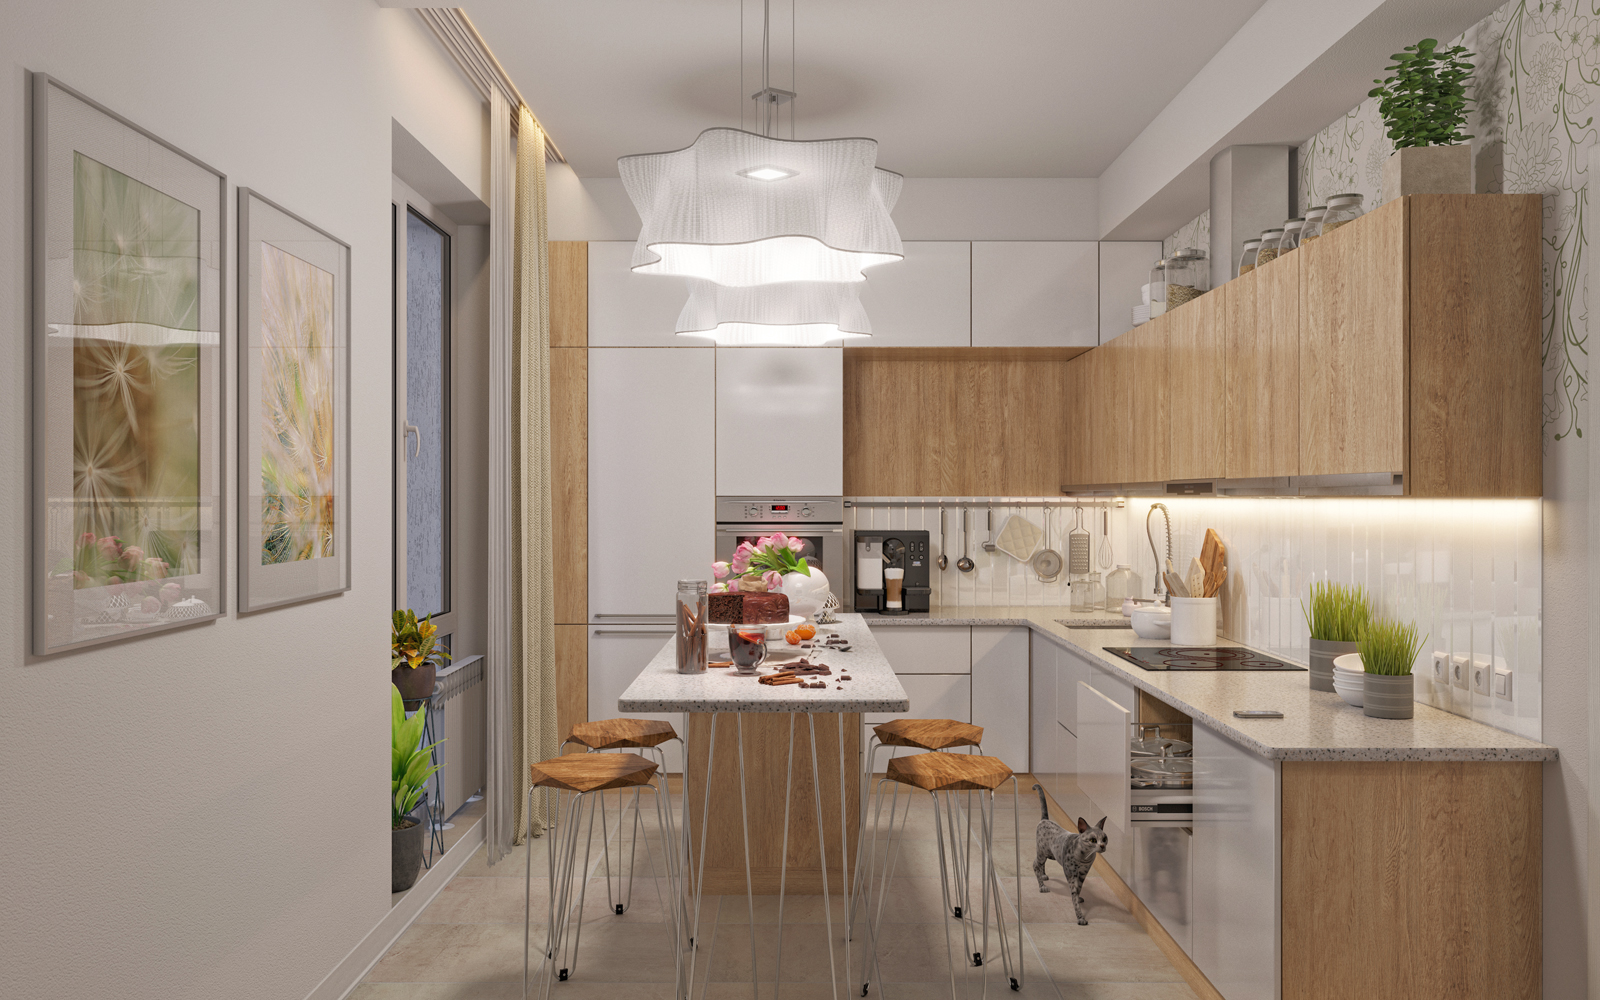 Residential complex "Nobel" 2-bedroom apartment. in 3d max corona render image